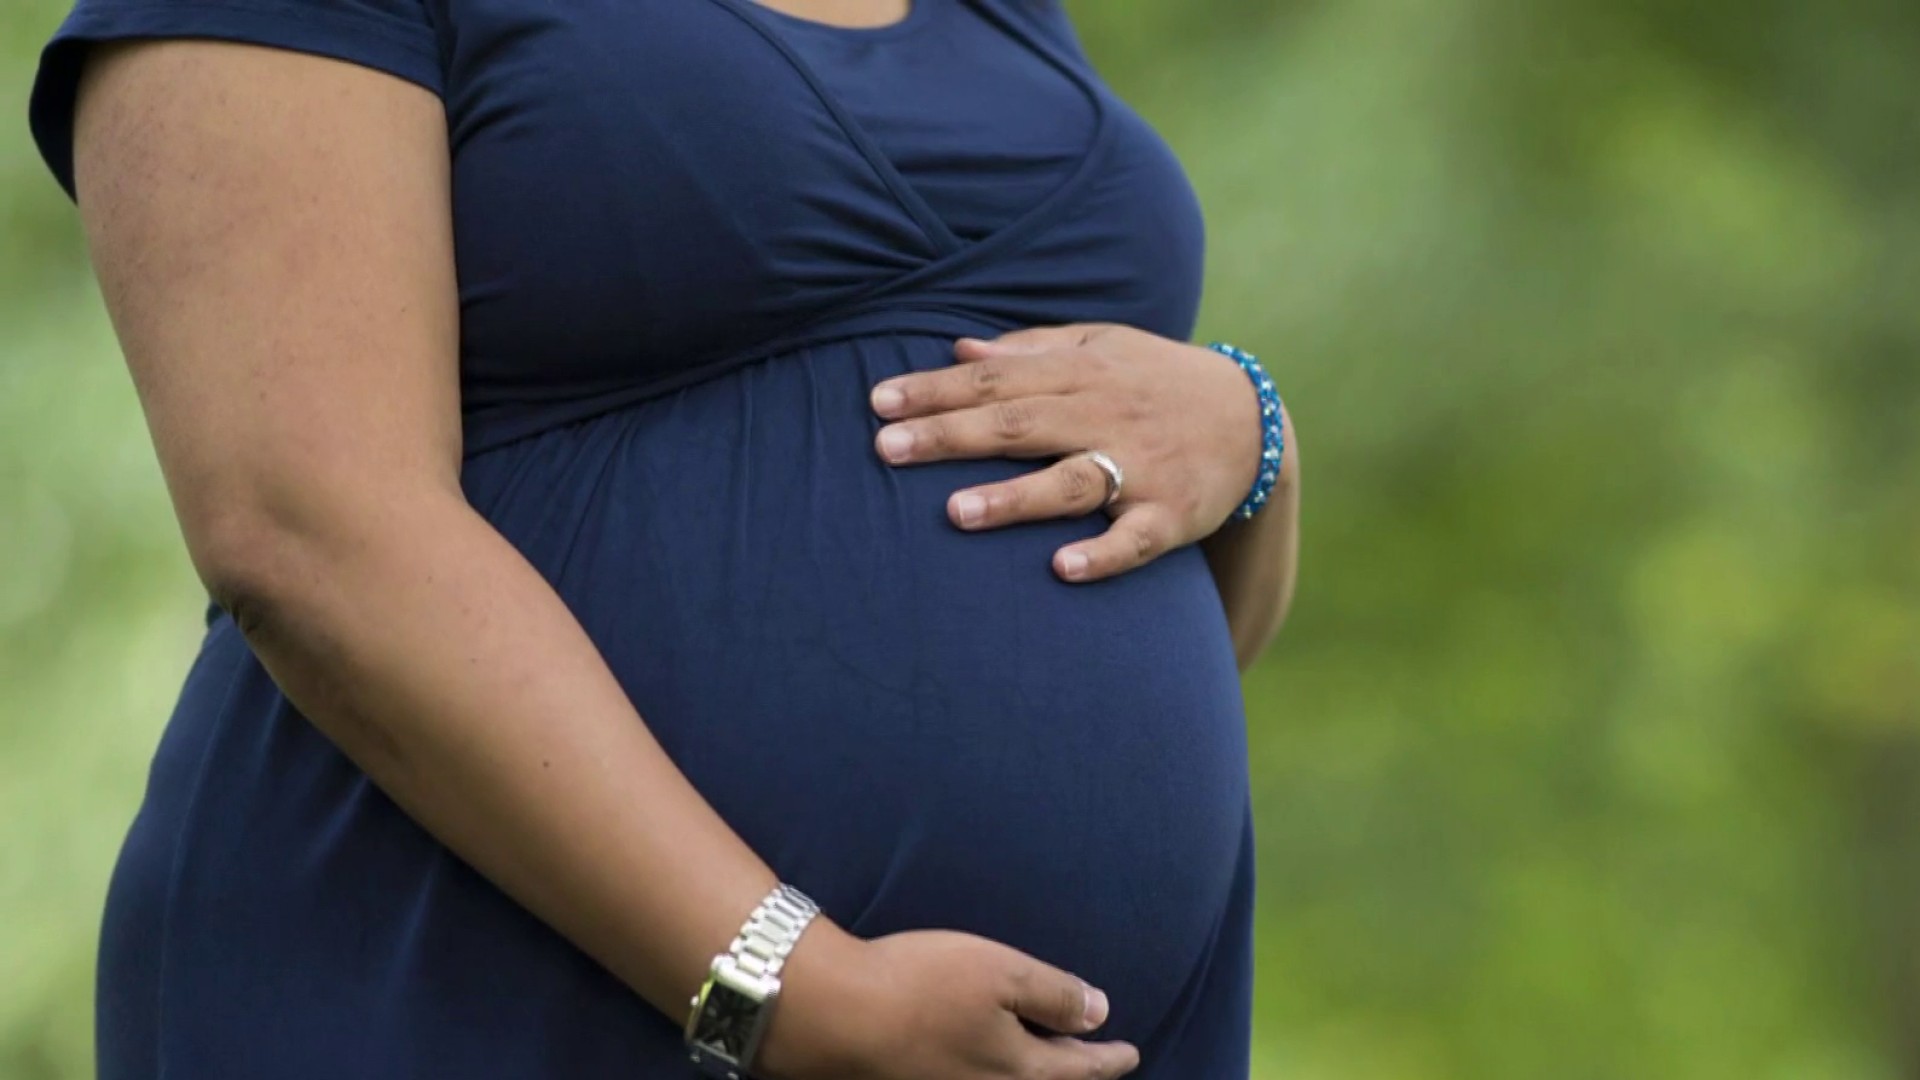 Covid unlocking risk for pregnant women, say doctors - BBC News